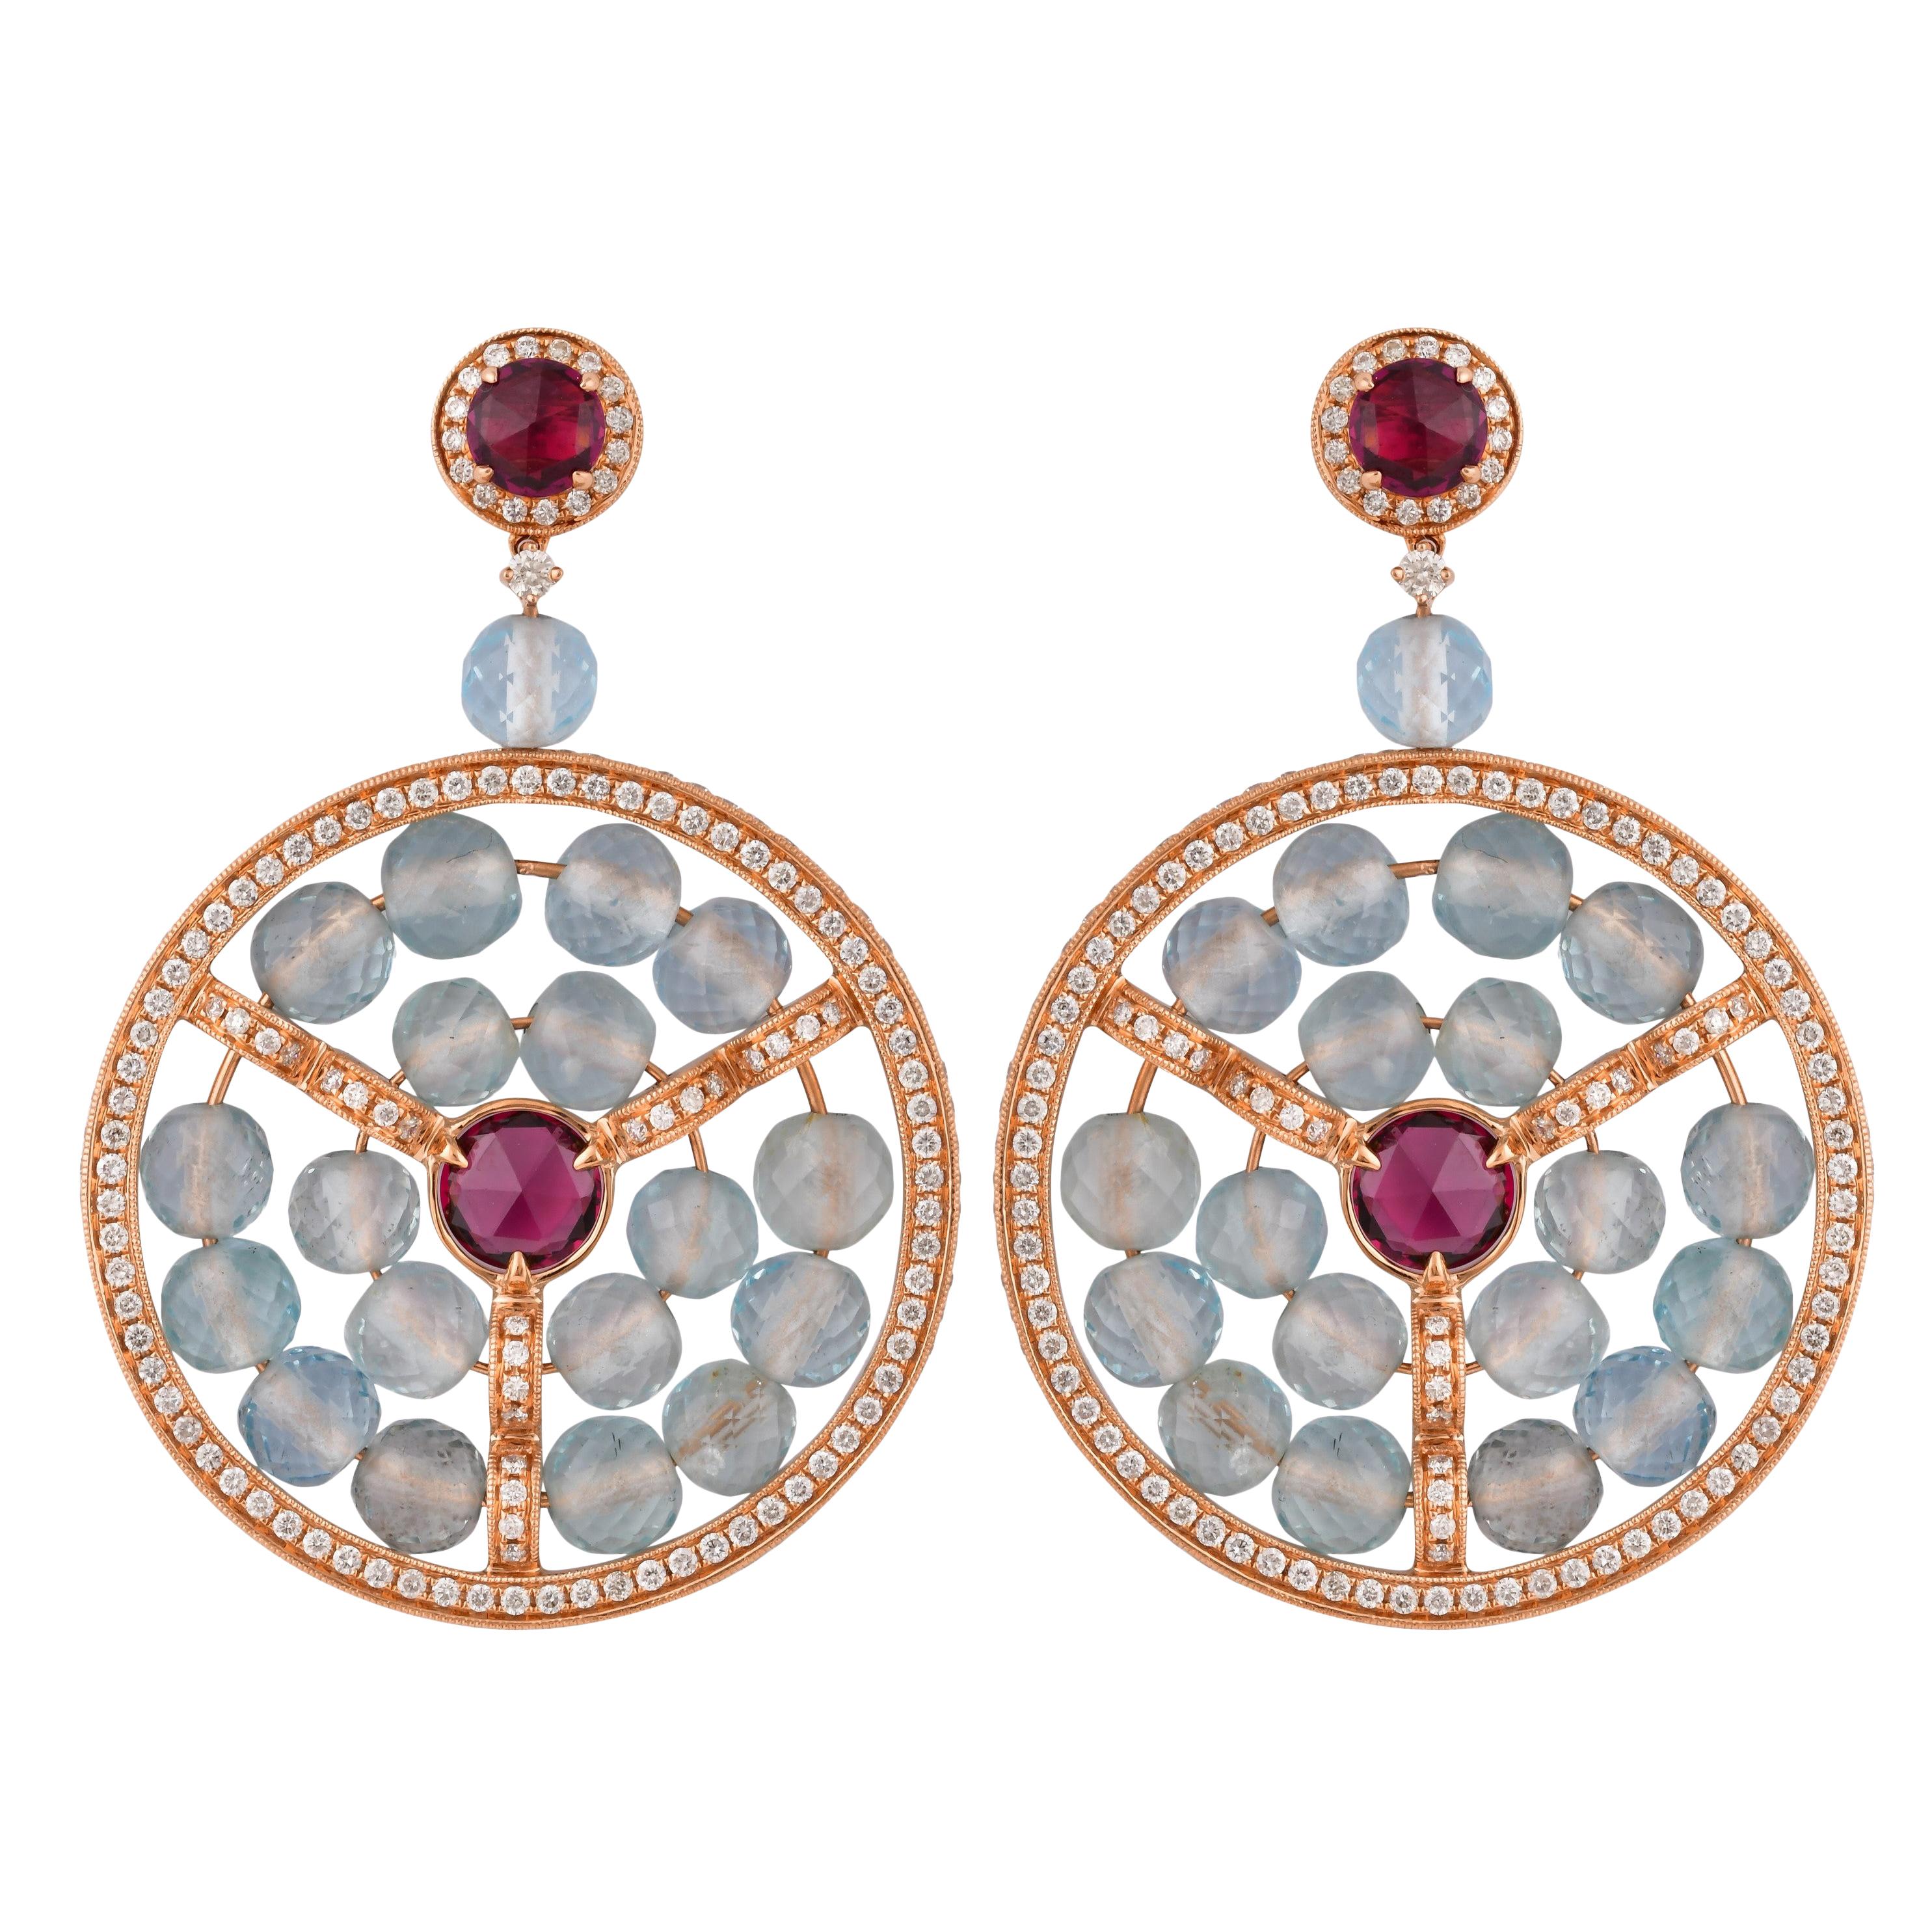 Designer 55.28 Carat Aquamarine Earrings in 18 Karat Rose Gold with Diamonds